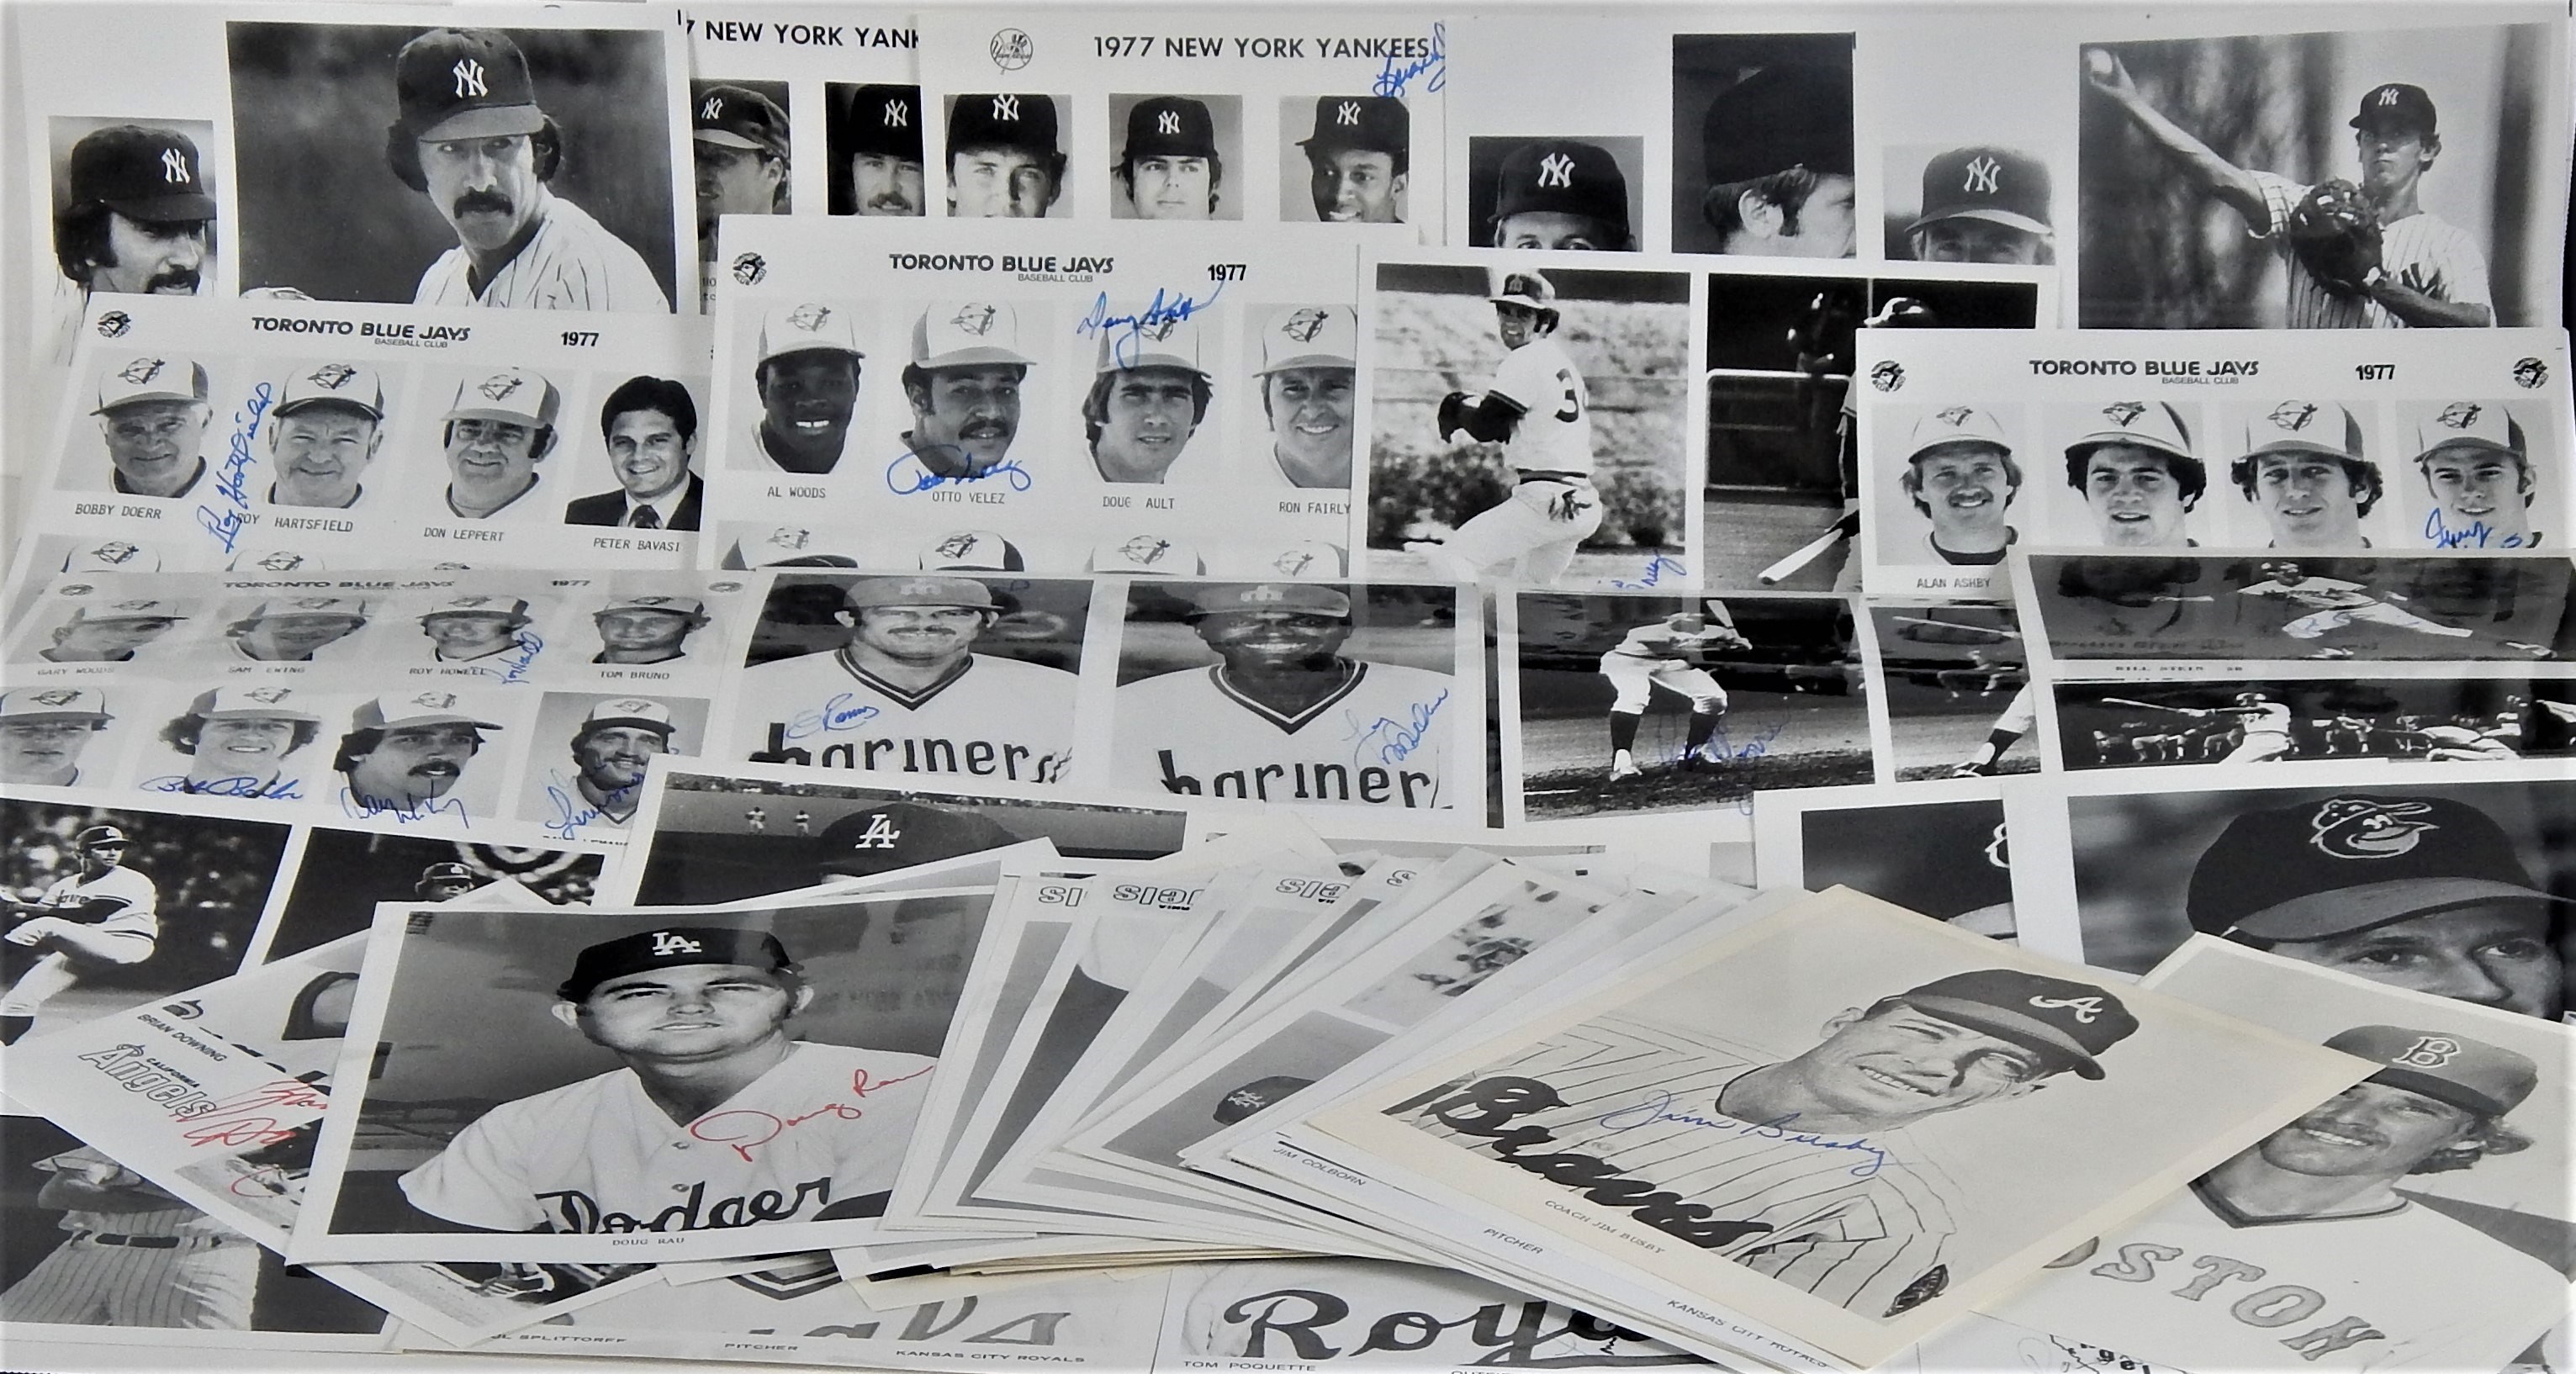 Baseball Autographs - 1970's Signed Publicity Photos w/1977 New York Yankee Photos (82)